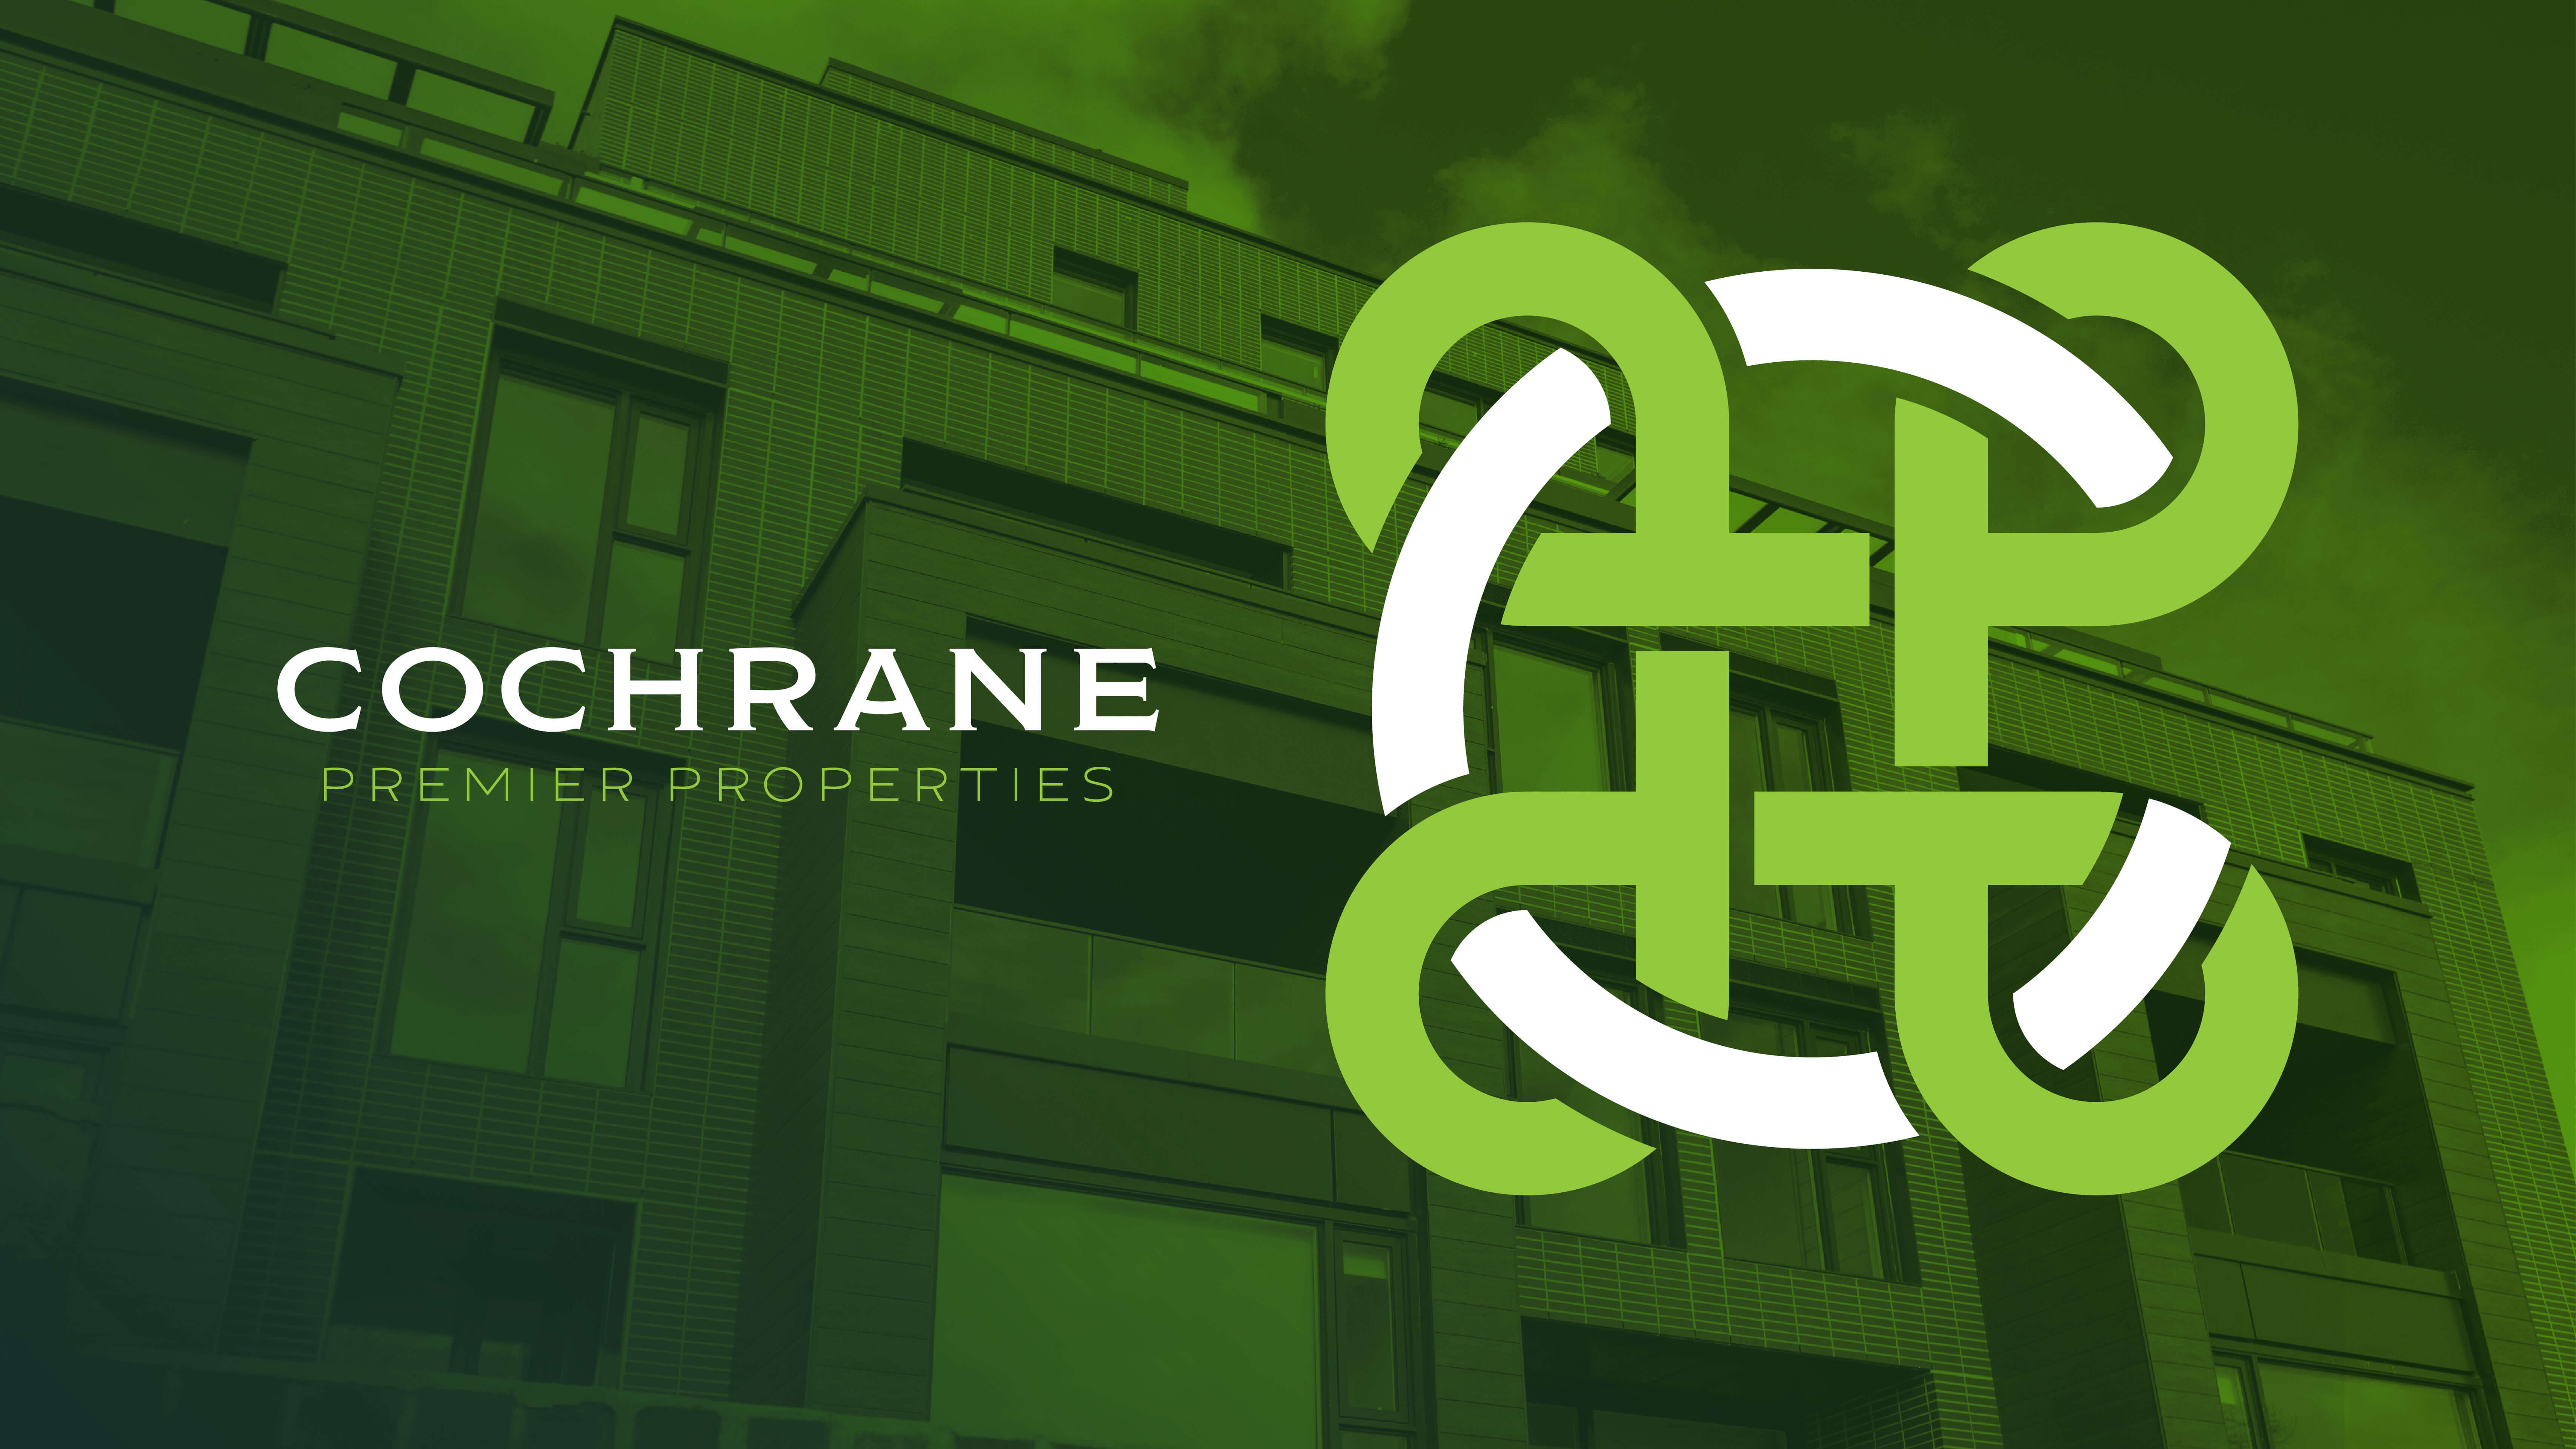 Cochrane Premier Properties | Branding